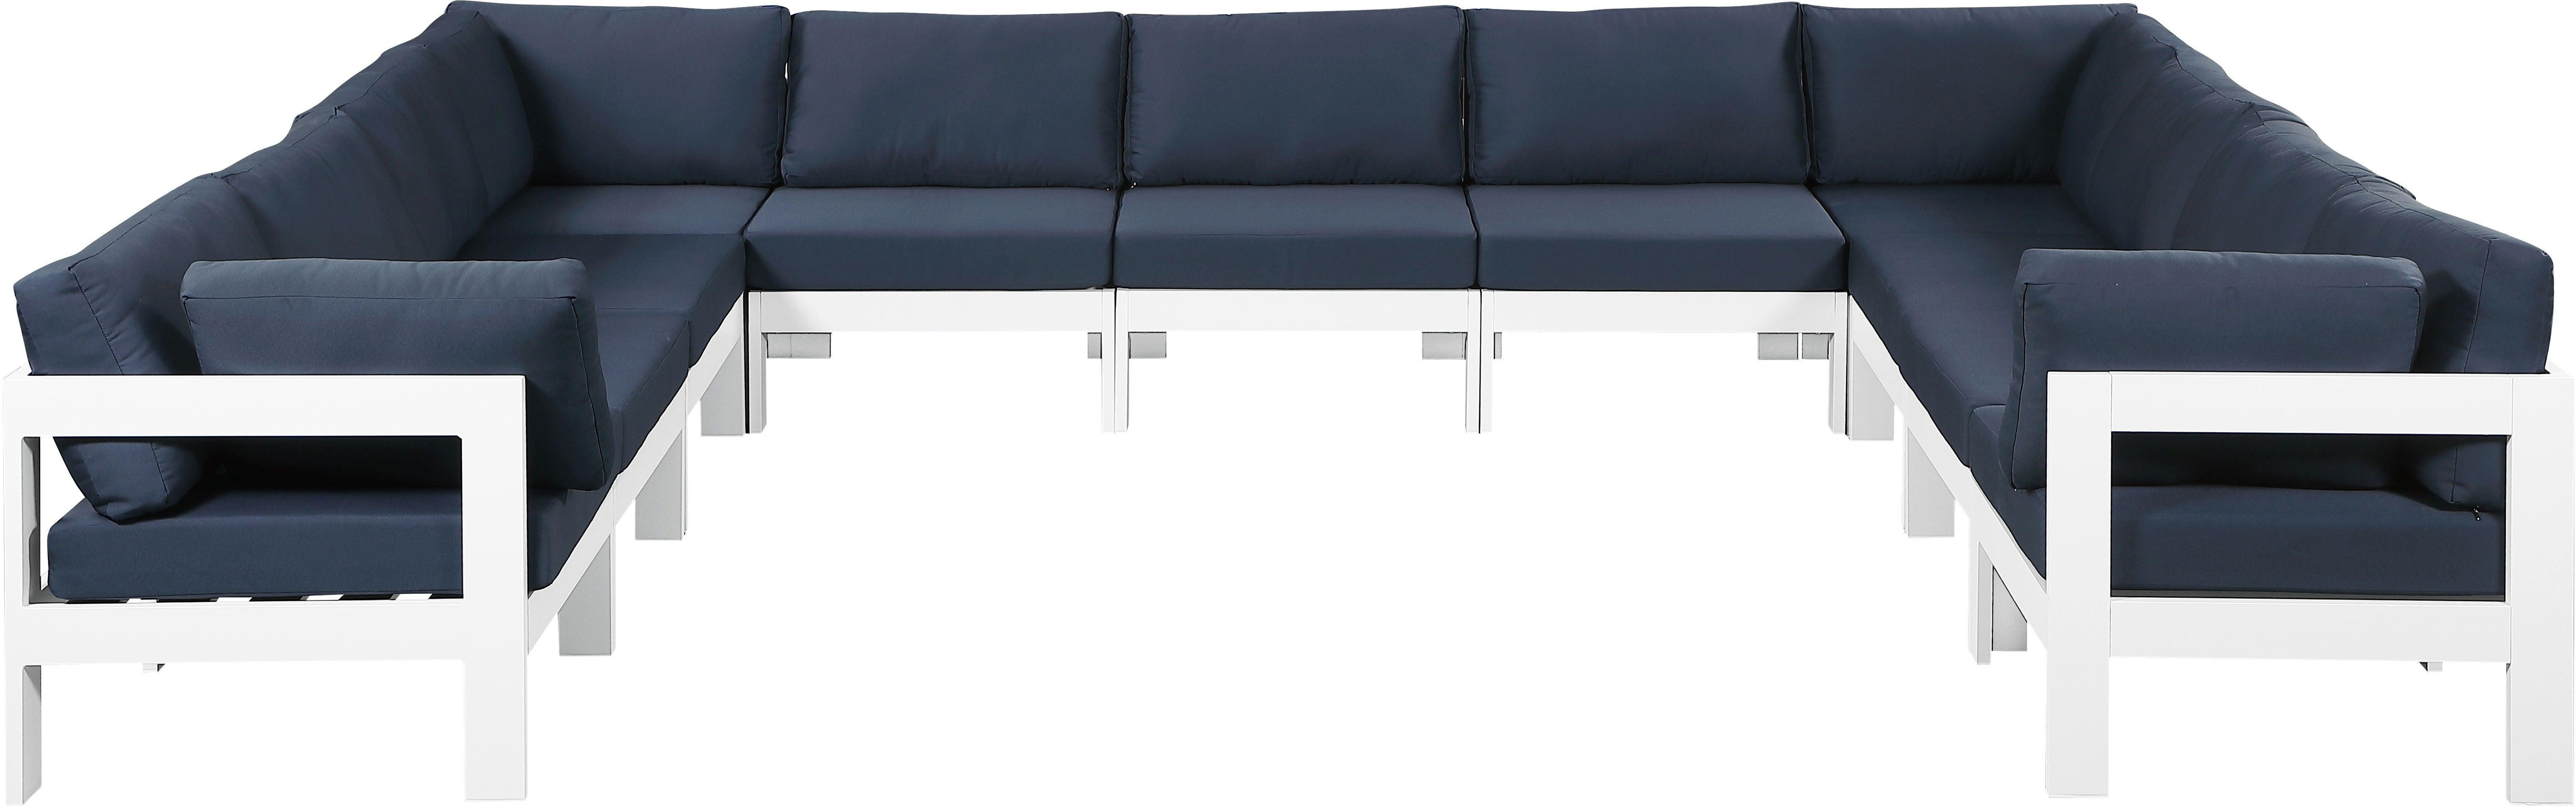 Meridian Furniture - Nizuc - Outdoor Patio Modular Sectional 11 Piece - Navy - 5th Avenue Furniture